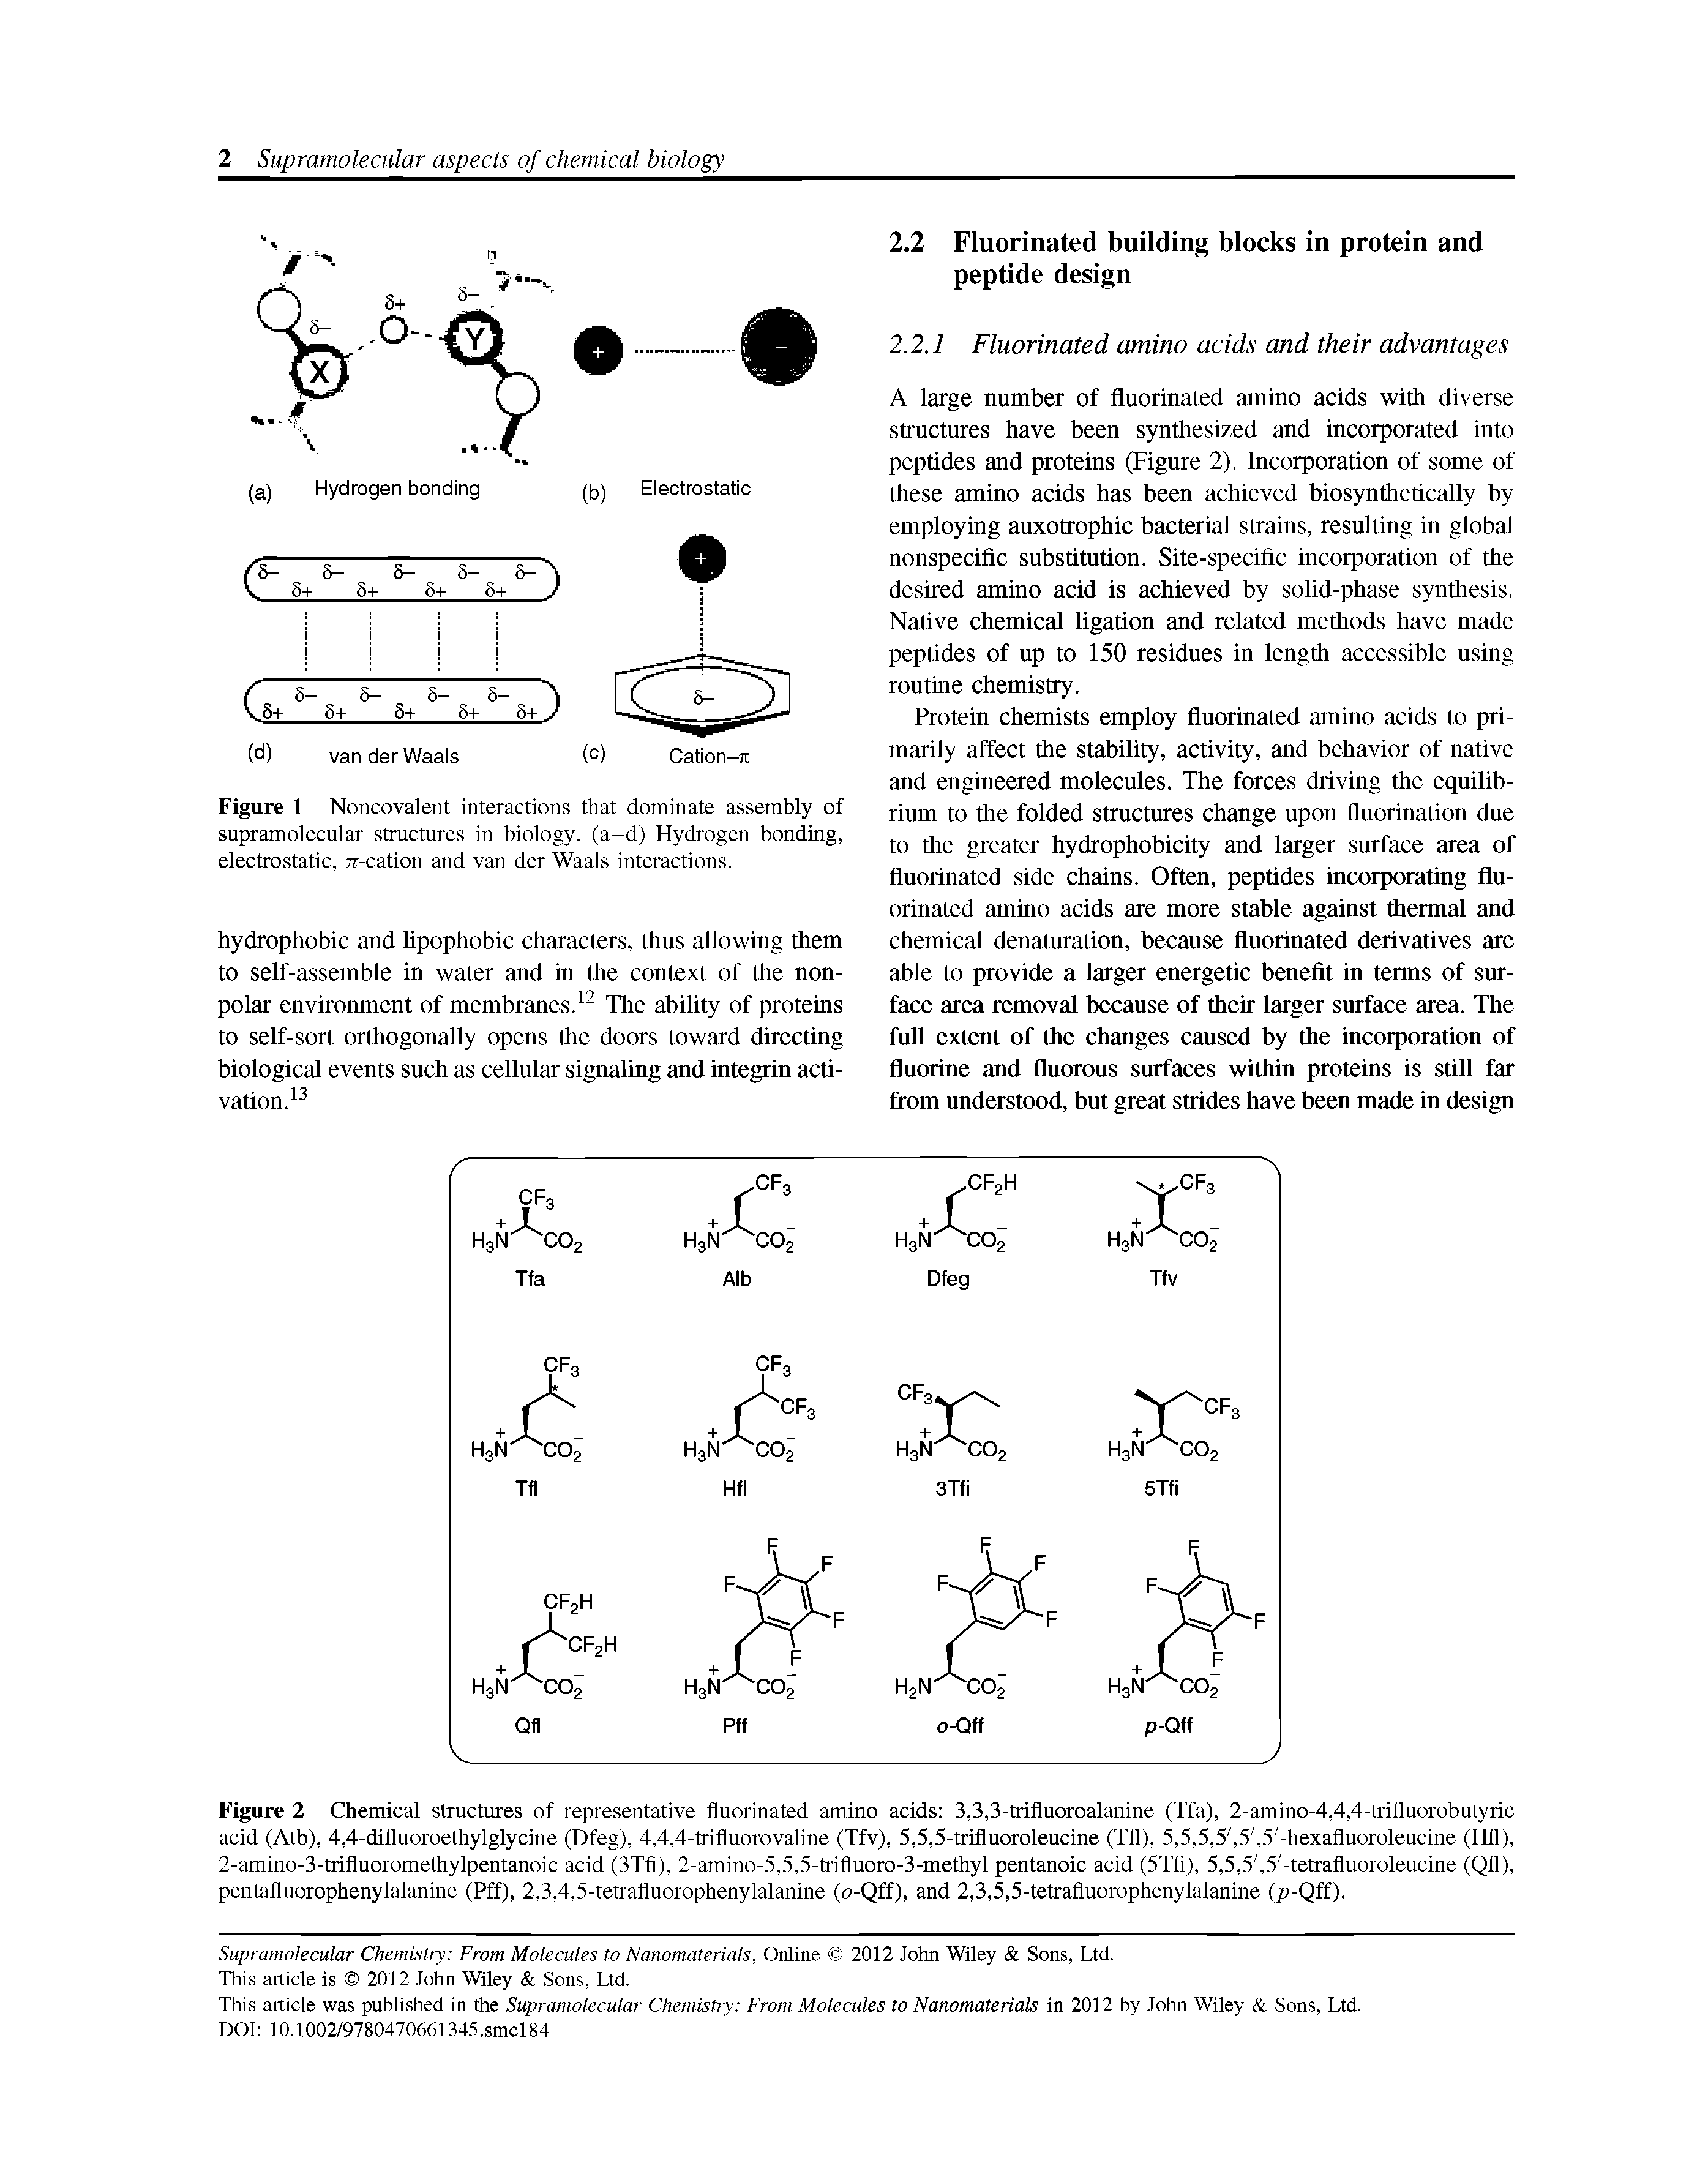 Figure 2 Chemical structures of representative fluorinated amino acids 3,3,3-trifluoroalanine (Tfa), 2-amino-4,4,4-trifluorobutyric acid (Atb), 4,4-difluoroethylglycine (Dfeg), 4,4,4-trifluorovaline (Tfv), 5,5,5-trifluoroleucine (Tfl), 5,5,5,5, 5, 5 -hexafluoroleucine (Hfl), 2-amino-3-trifluoromethylpentanoic acid (3Tfl), 2-amino-5,5,5-trifluoro-3-methyl pentanoic acid (5Tfi), 5,5,5, 5 -tetrafluoroleucine (Qfl), pentafluorophenylalanine (Pff), 2,3,4,5-tetrafluorophenylalanine (o-Qff), and 2,3,5,5-tetrafluorophenylalanine (p-Qff).